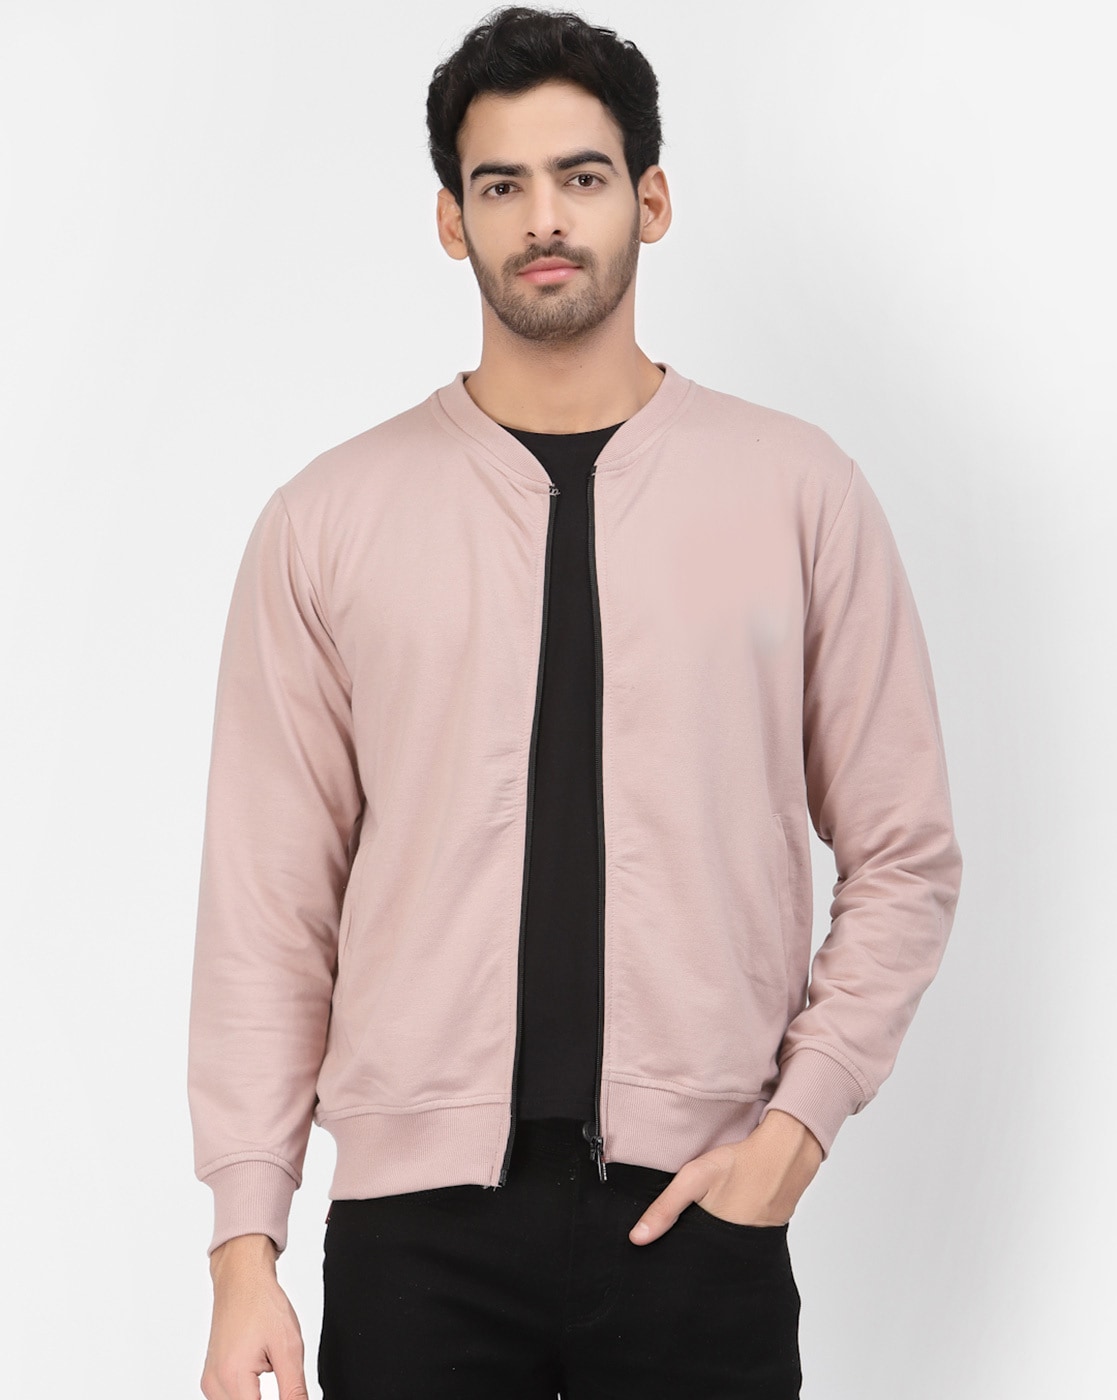 Topman bomber jacket in pink | ASOS